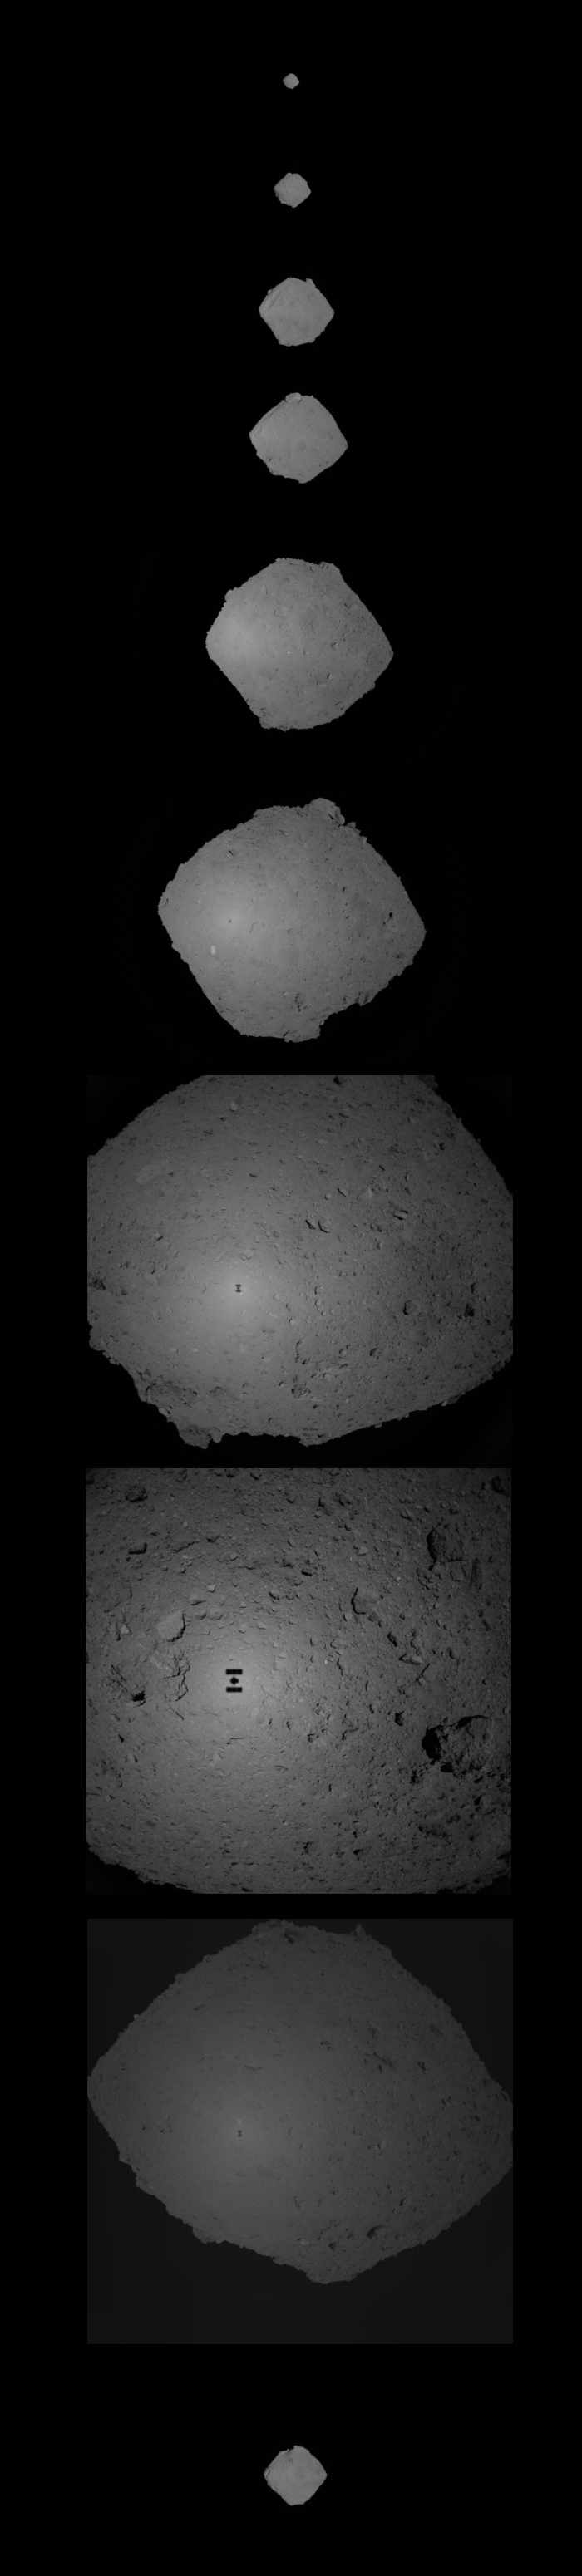 Вторая репетиция посадки на астероид Рюгу